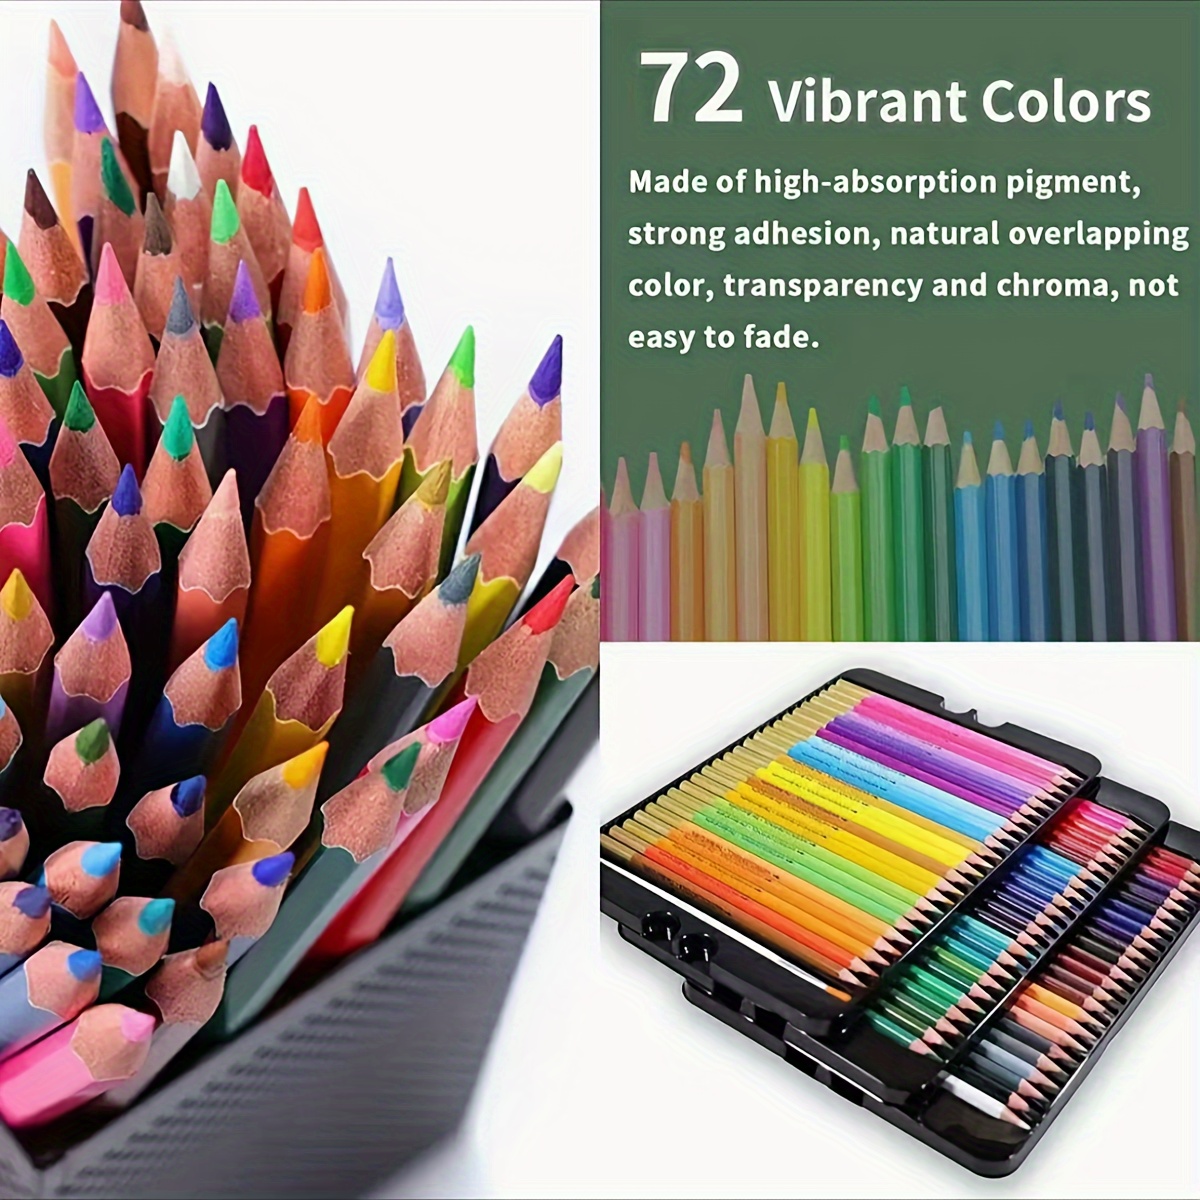 KALOUR 120pcs Watercolor Pencils Set,Professional Colored Pencil for Adult  Teens,Premium Art Supplies for Coloring, Blending